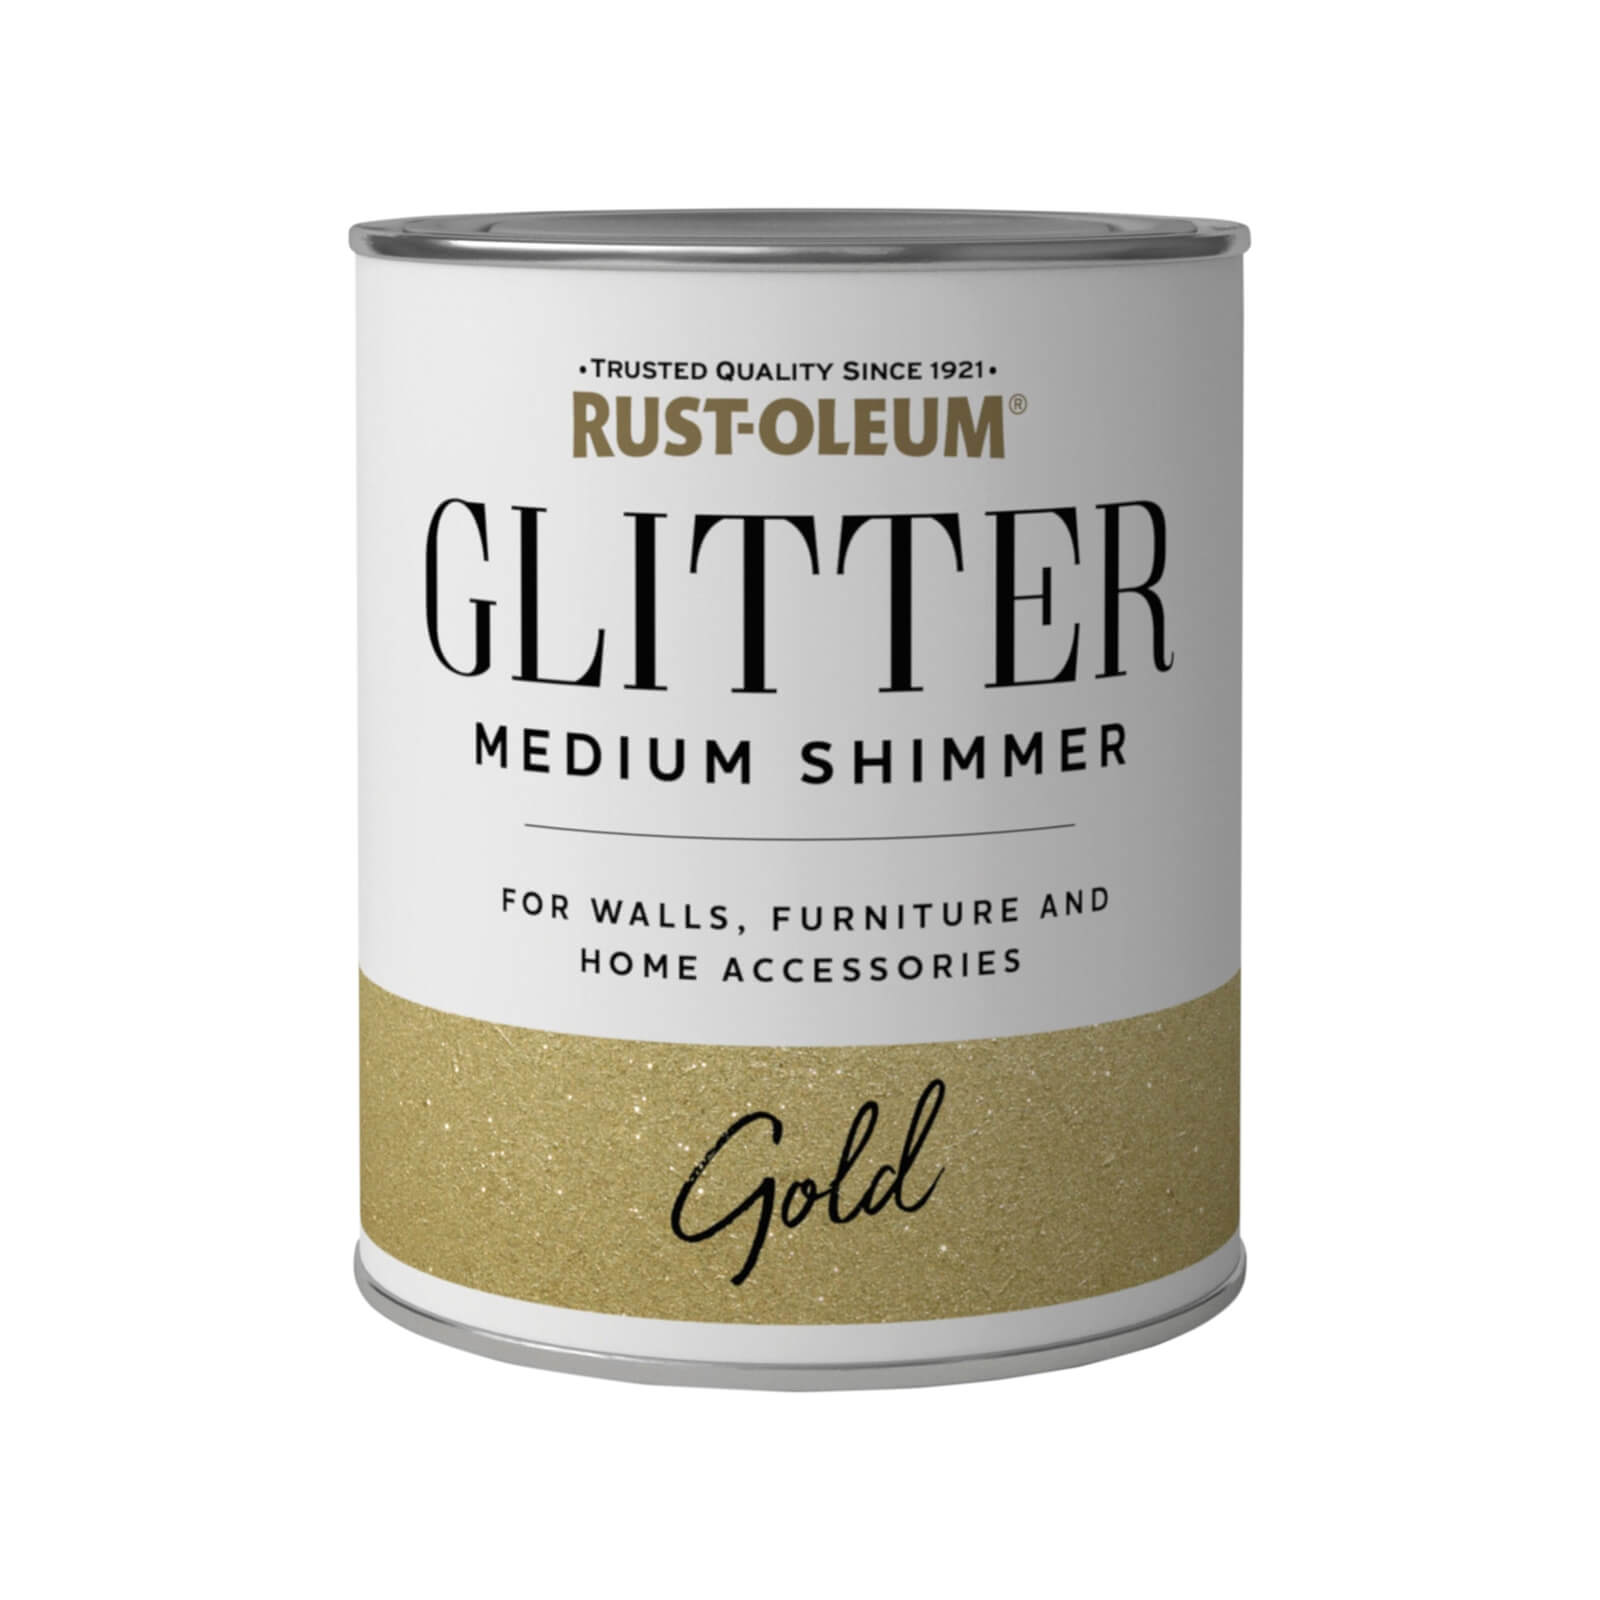 Photo of Rust-oleum Medium Shimmer Gold Glitter - 750ml